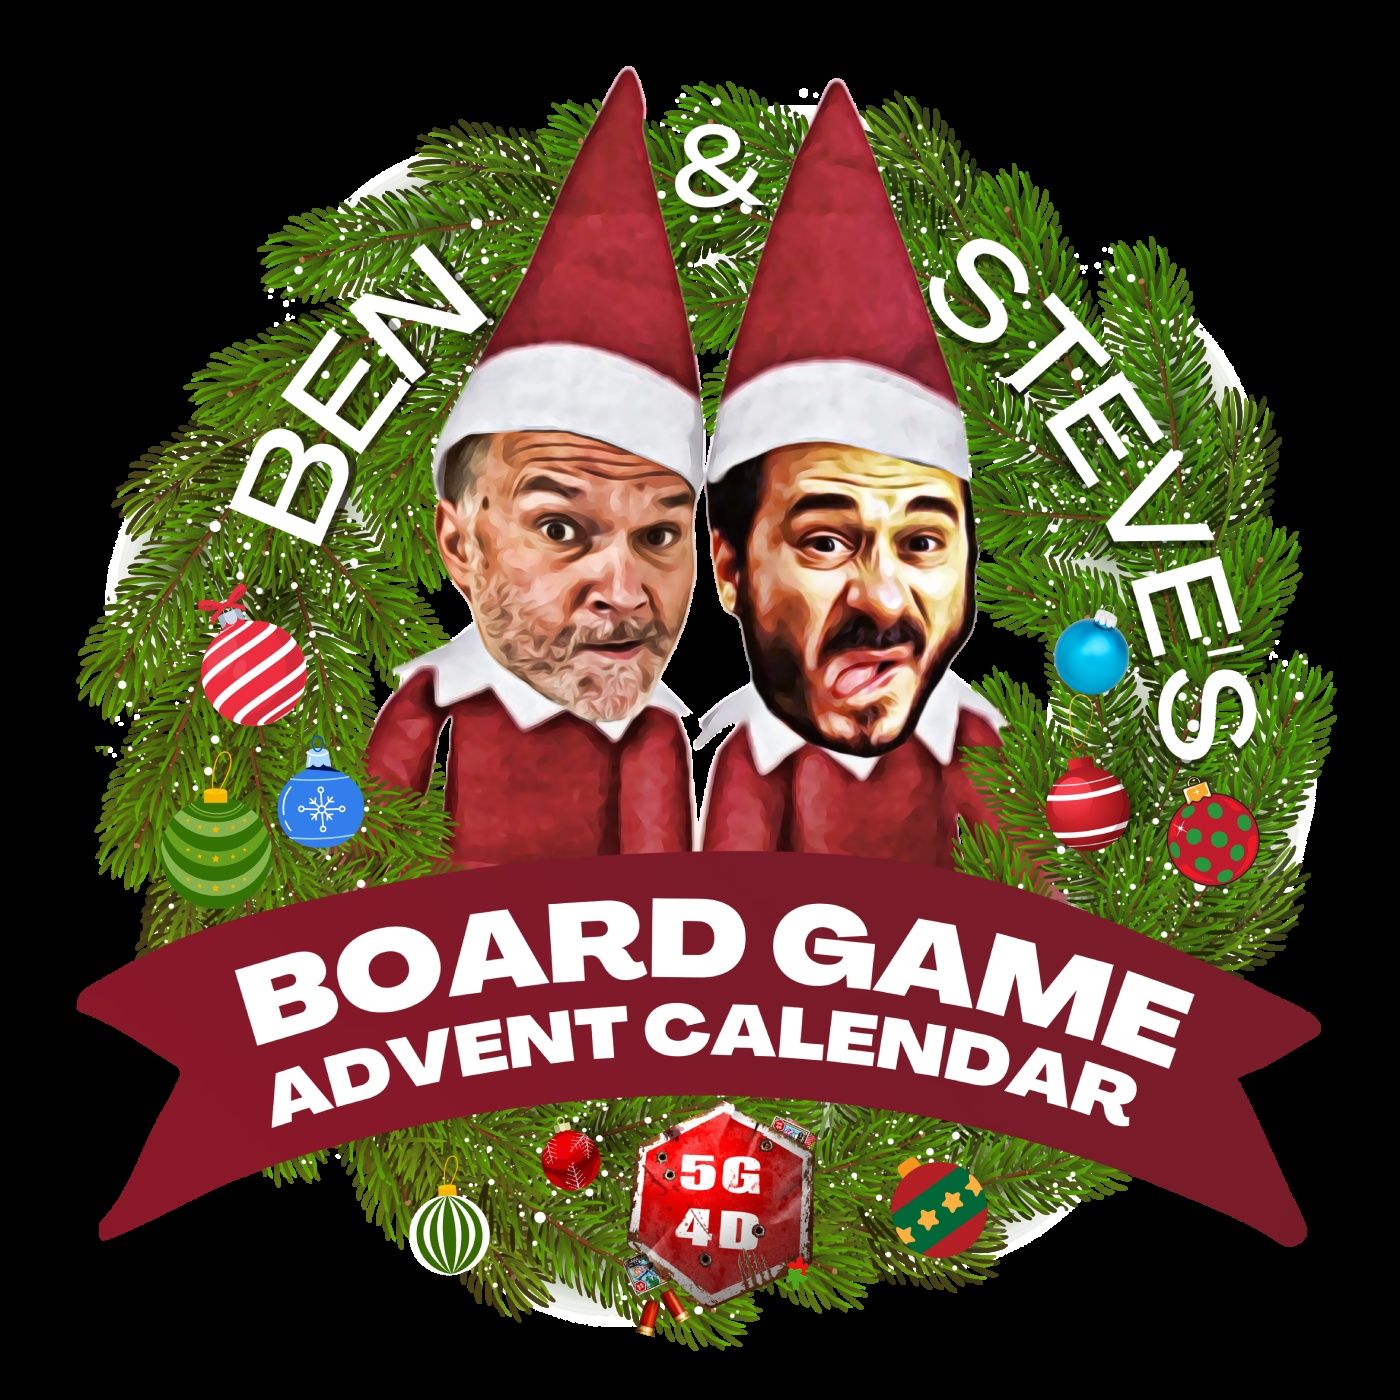 Ben and Steve's Board Game Advent Calender-Dec 22-Stephenson's Rocket